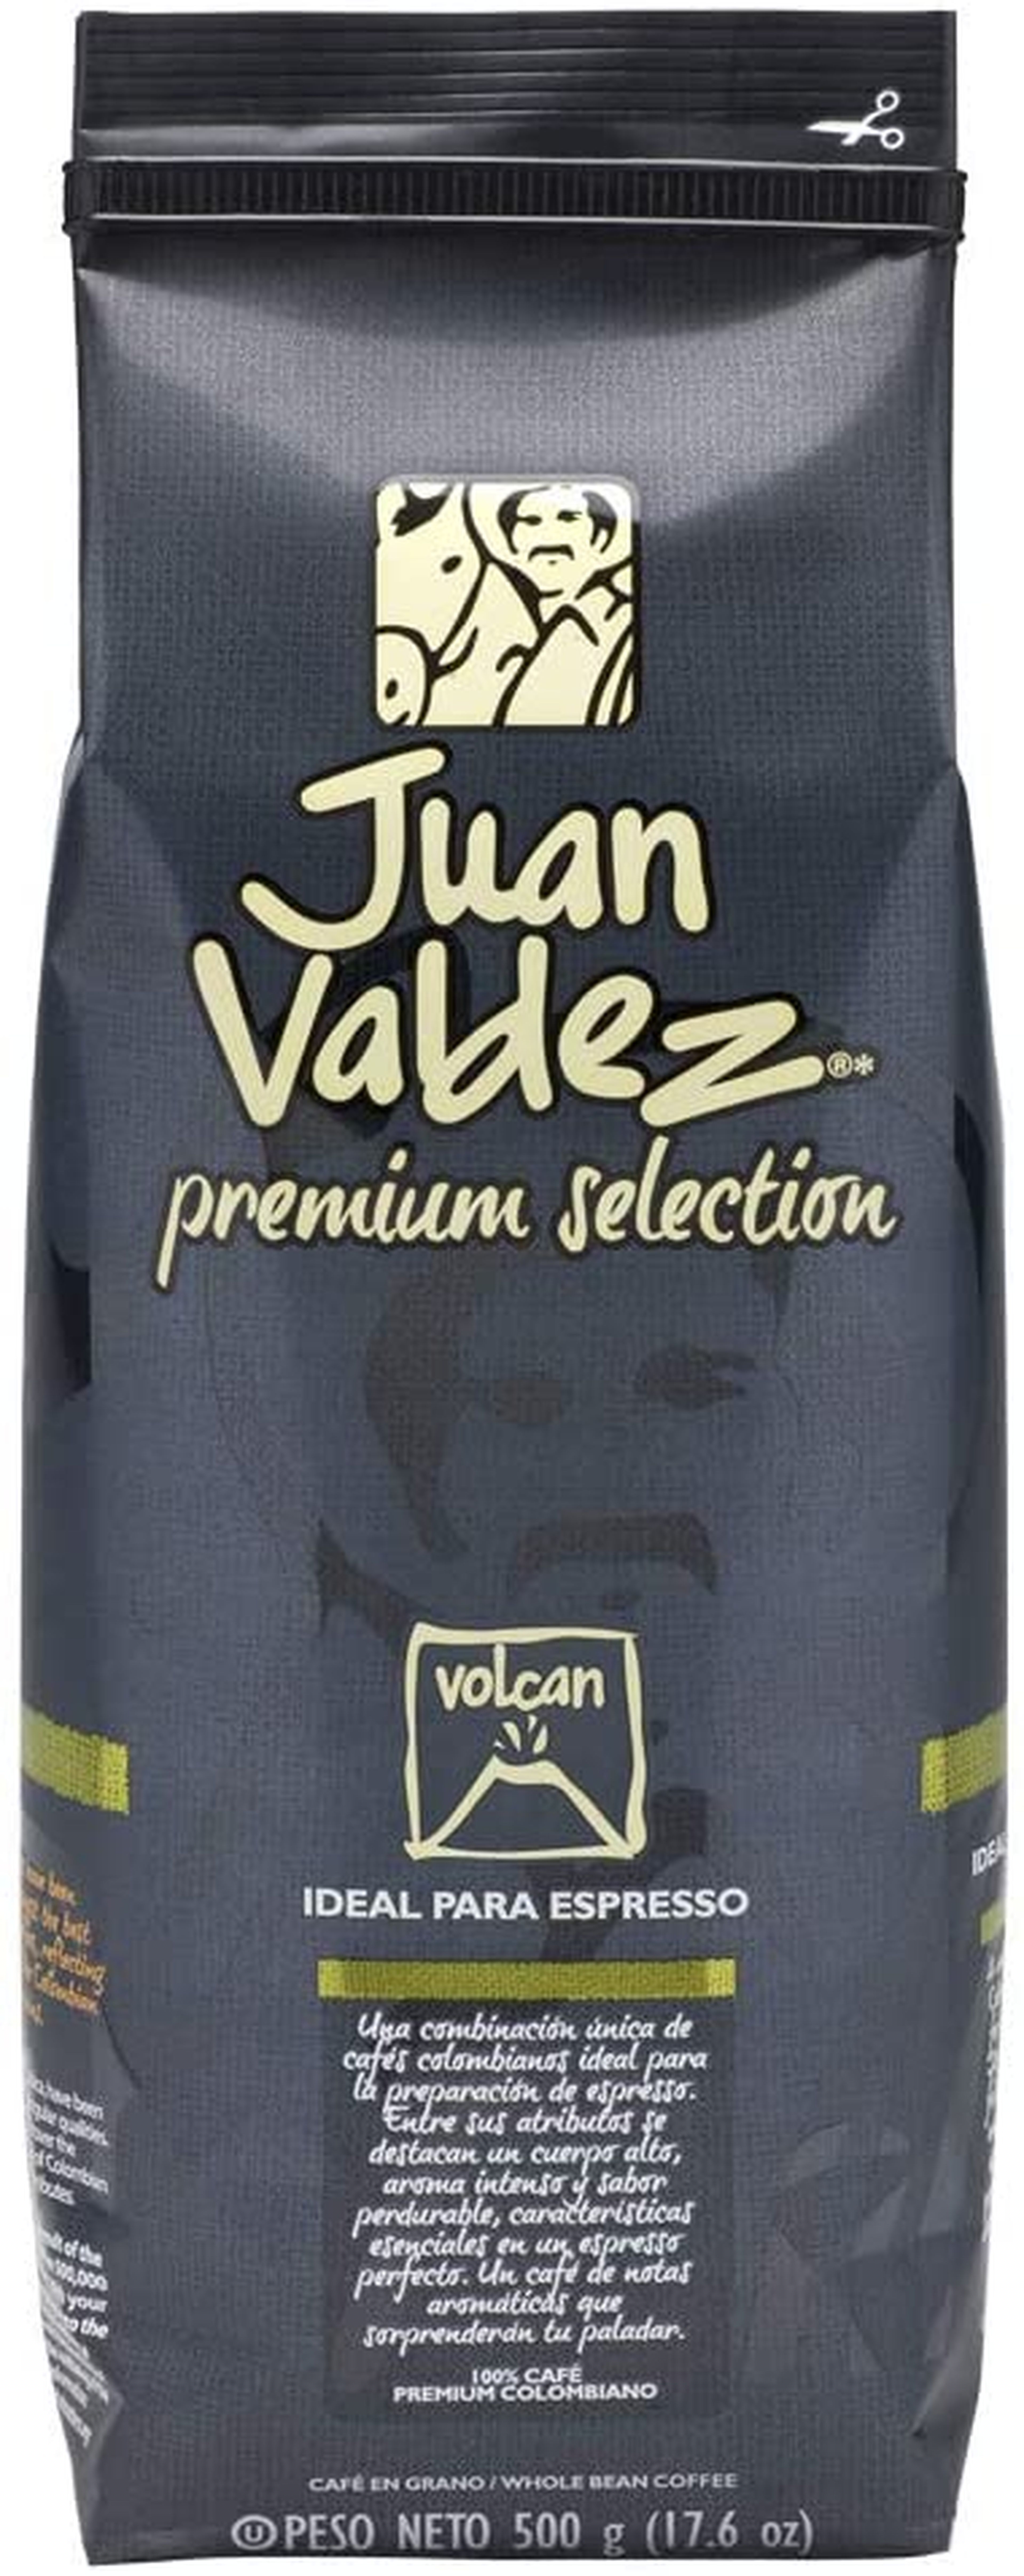 Café Juan Valdez Volcán